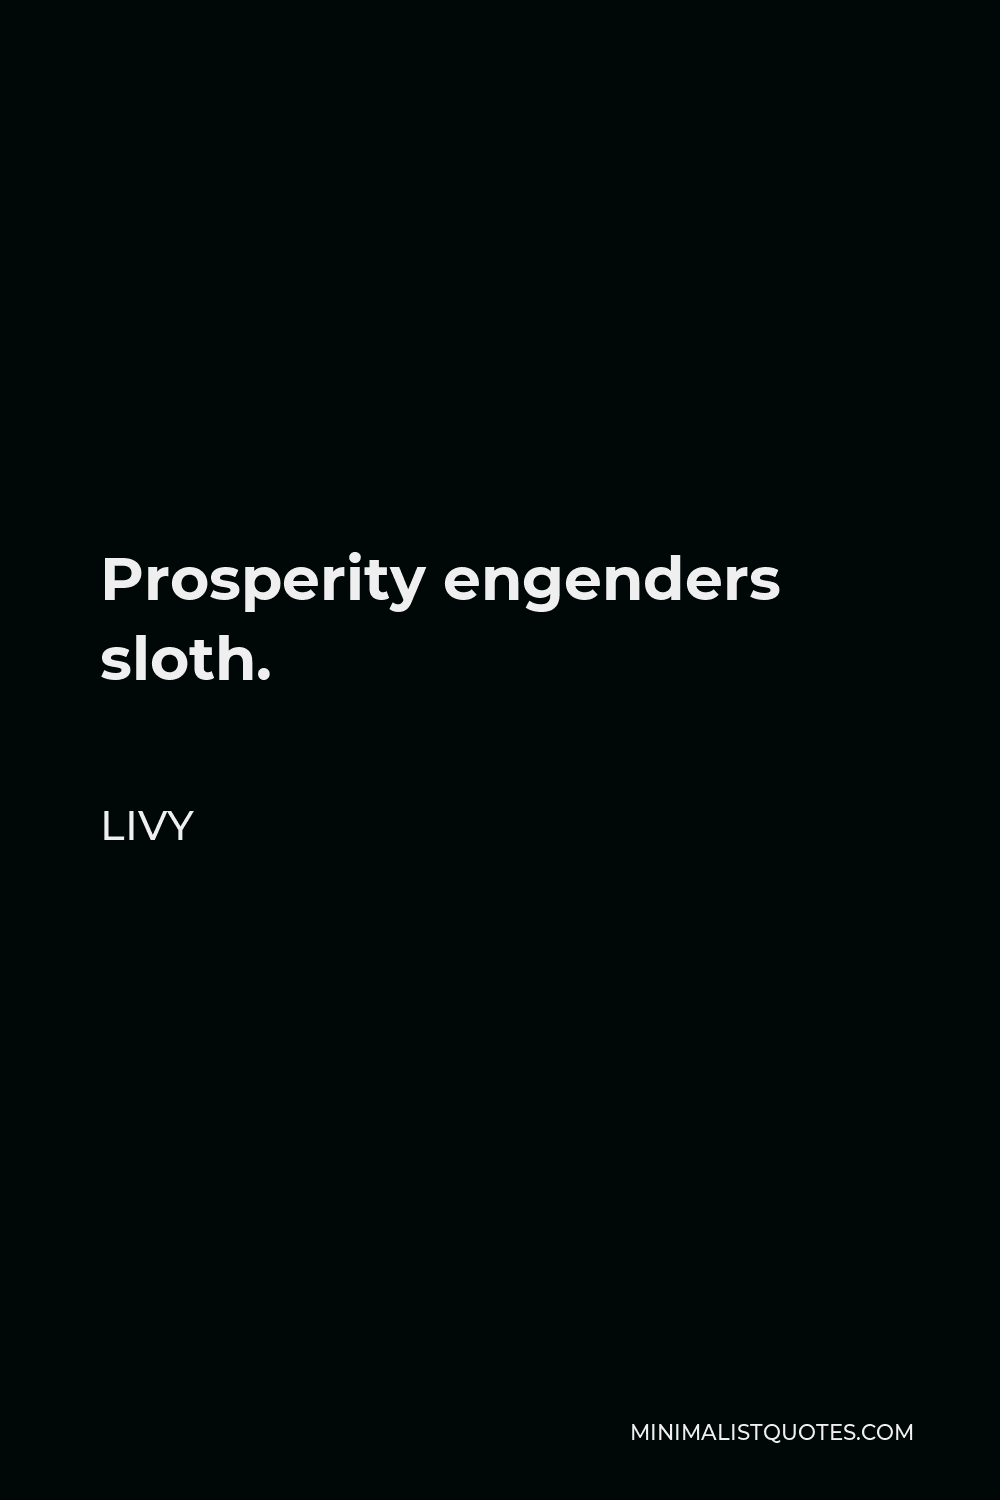 Livy Quote - Prosperity engenders sloth.